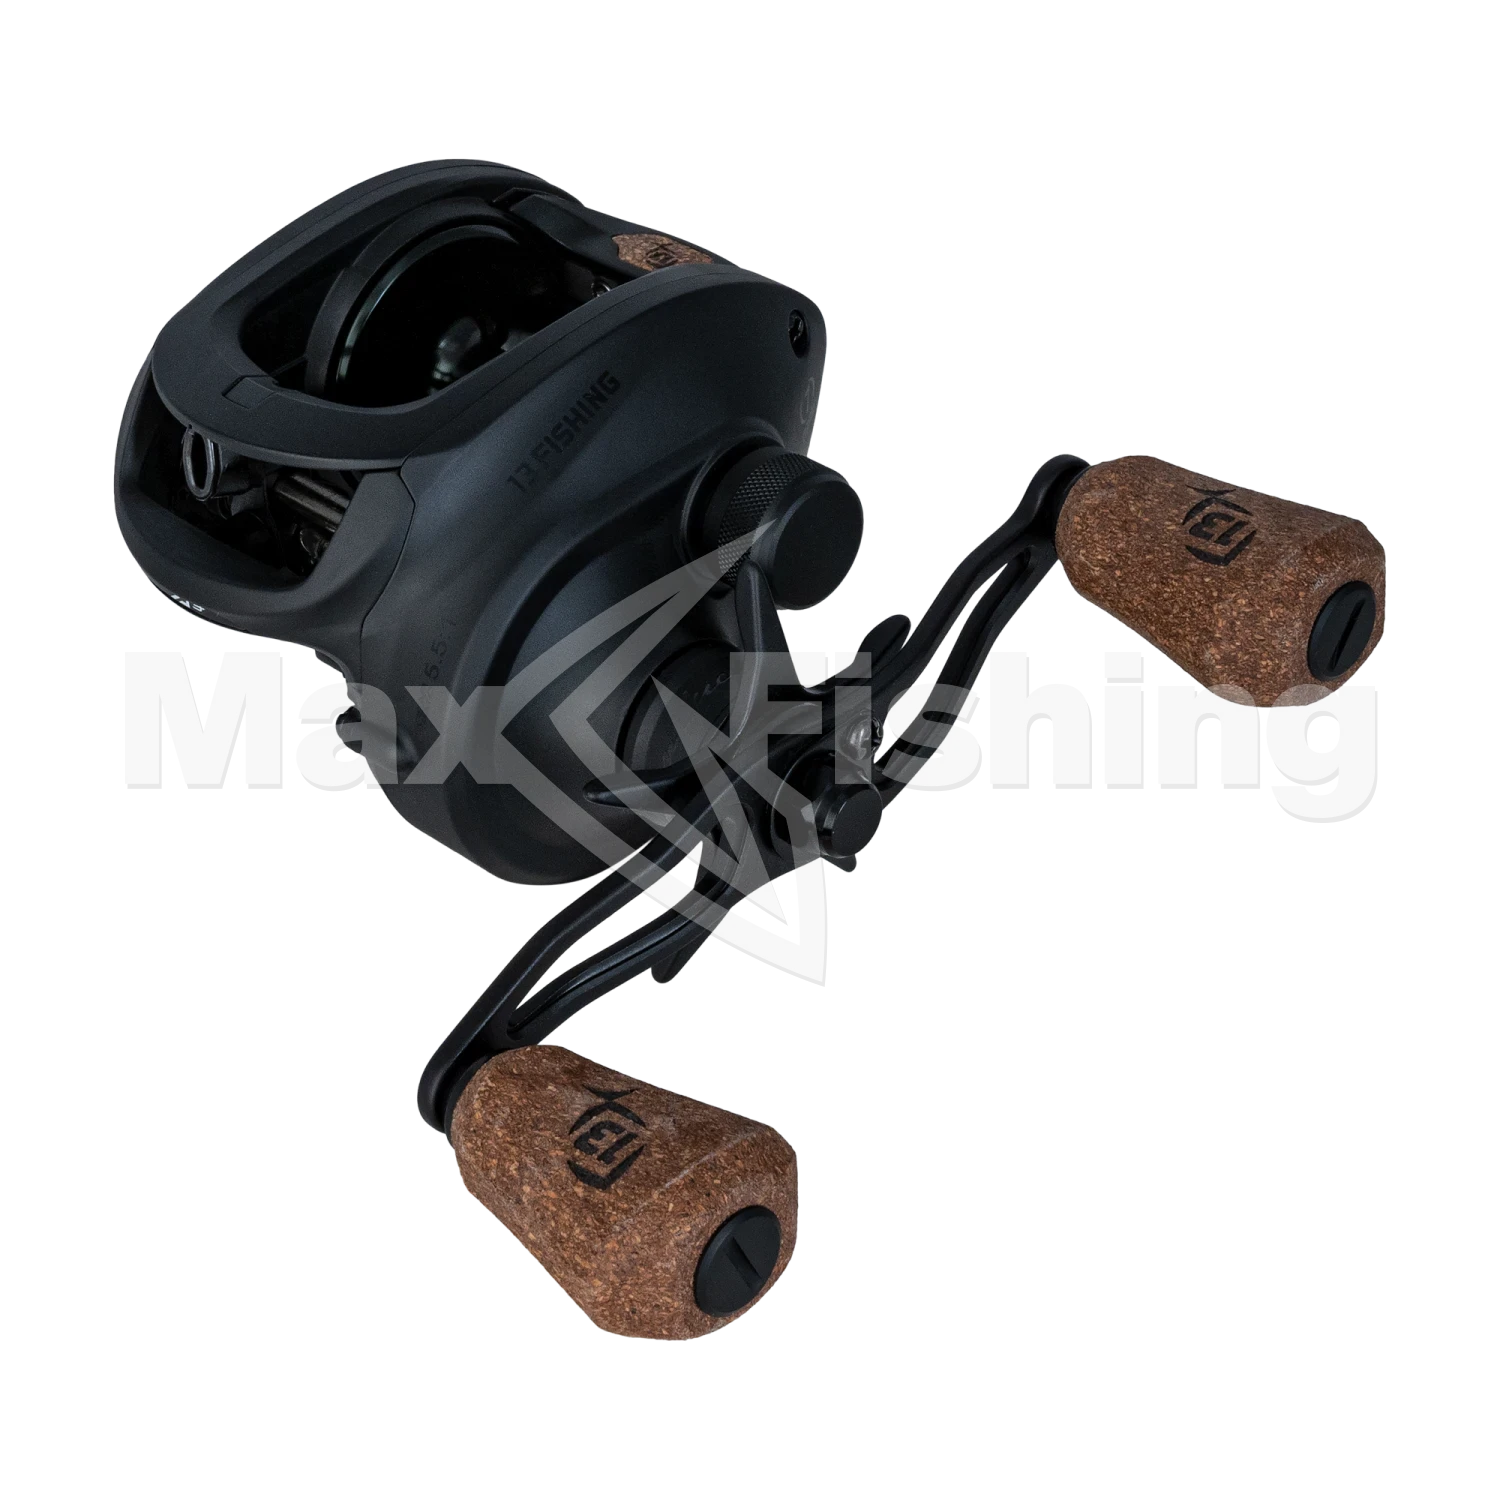 Катушка мультипликаторная 13 Fishing Concept A3 Casting Reel 5.5-LH